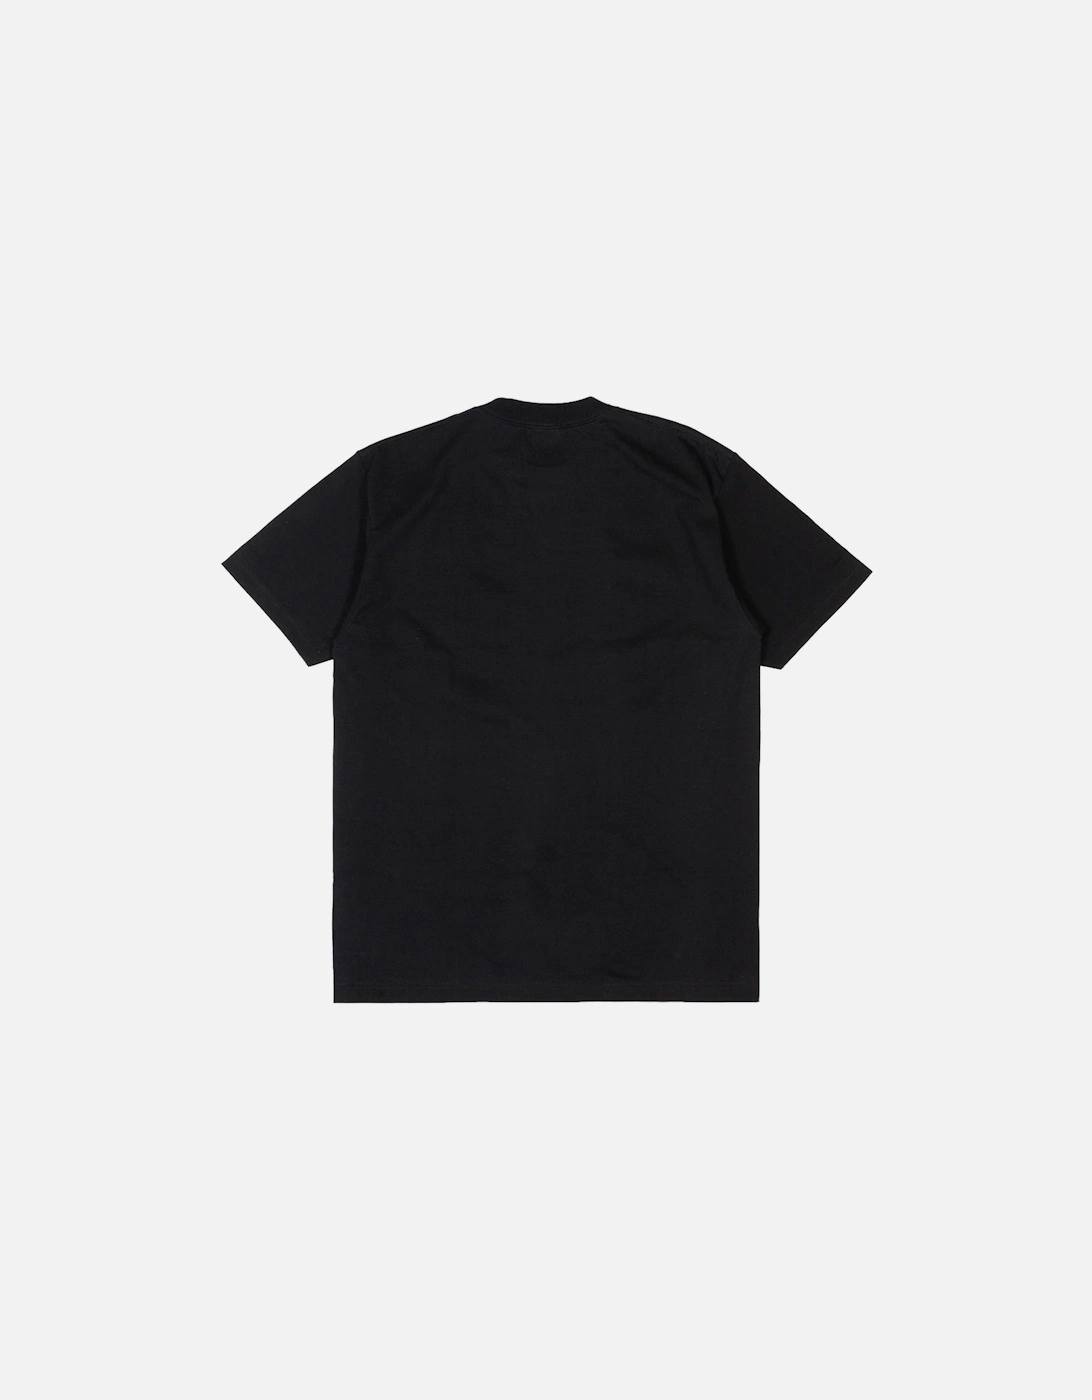 Heatwave T-Shirt - Black